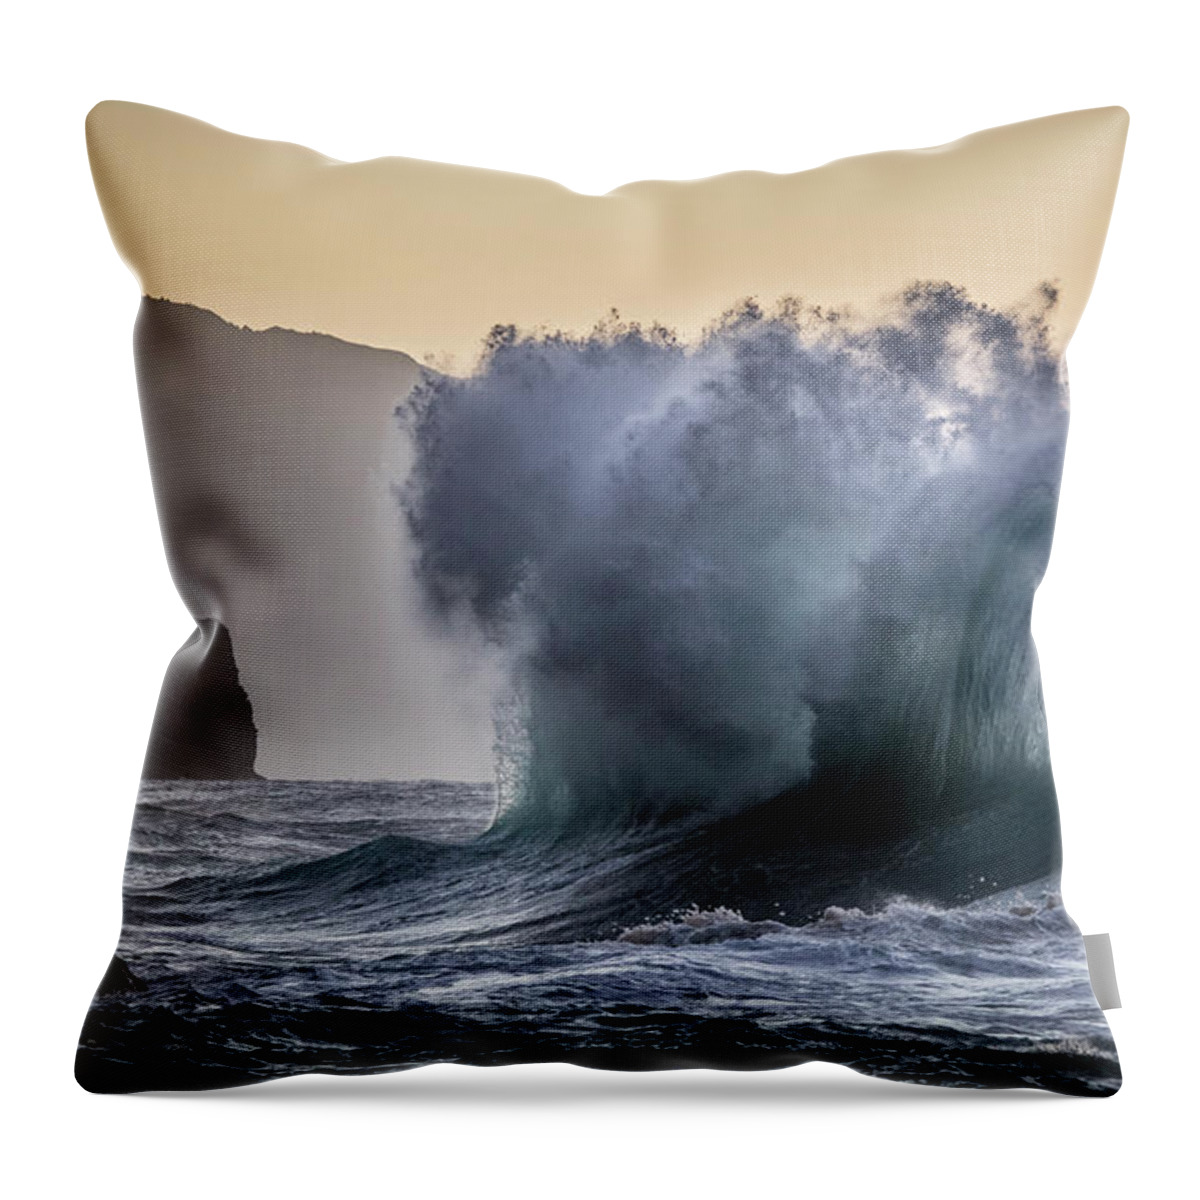 Napali Coast Hawaii Wave Explosion Throw Pillow featuring the photograph Napali Coast Kauai Wave Explosion by Dustin K Ryan